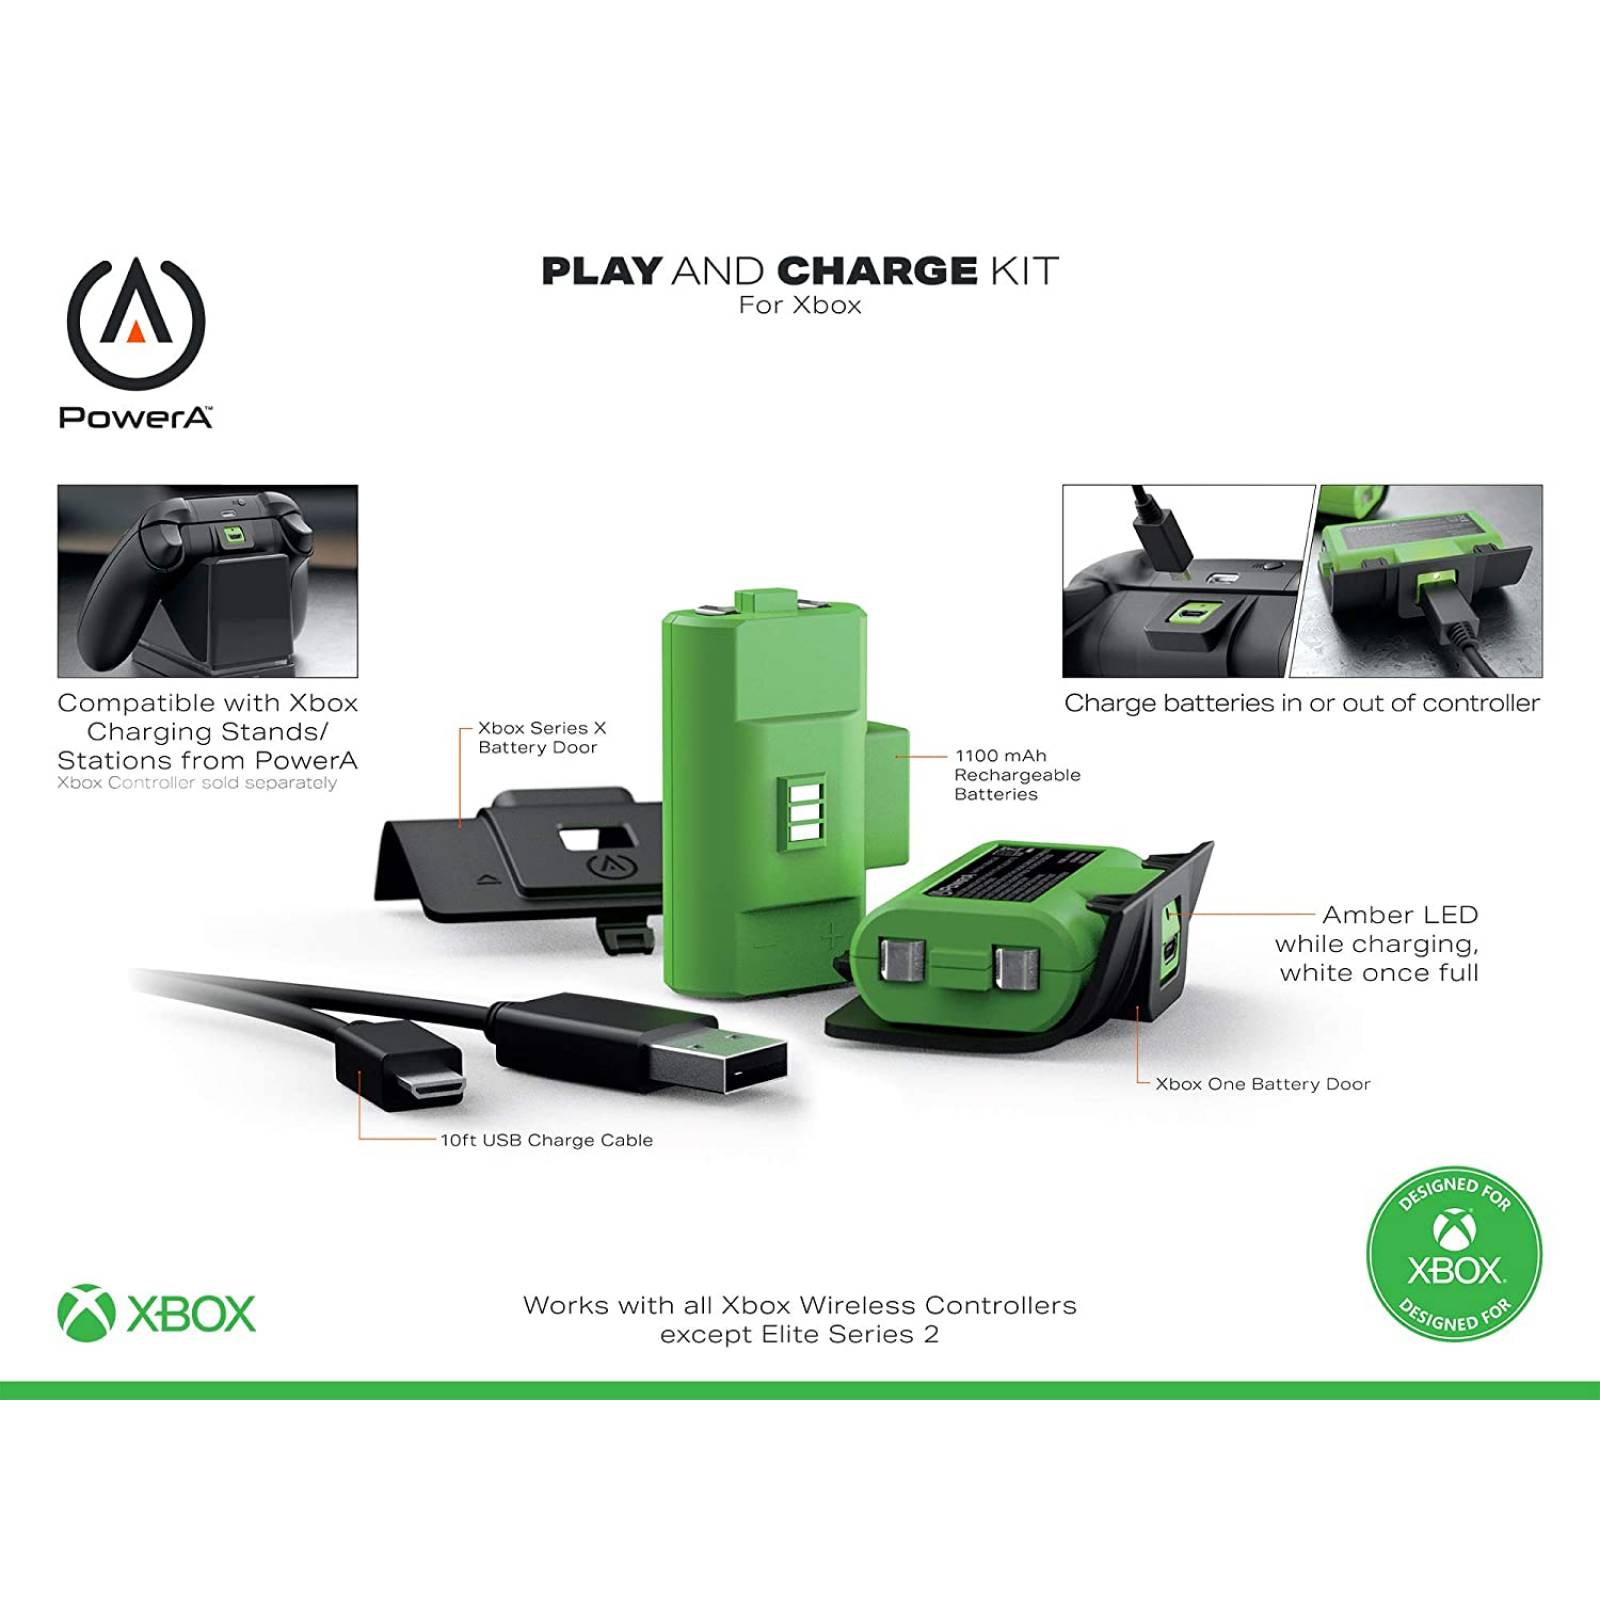 Carga Y Juega Xbox One, Serie Xs, Estacion Una Pila 1100mah